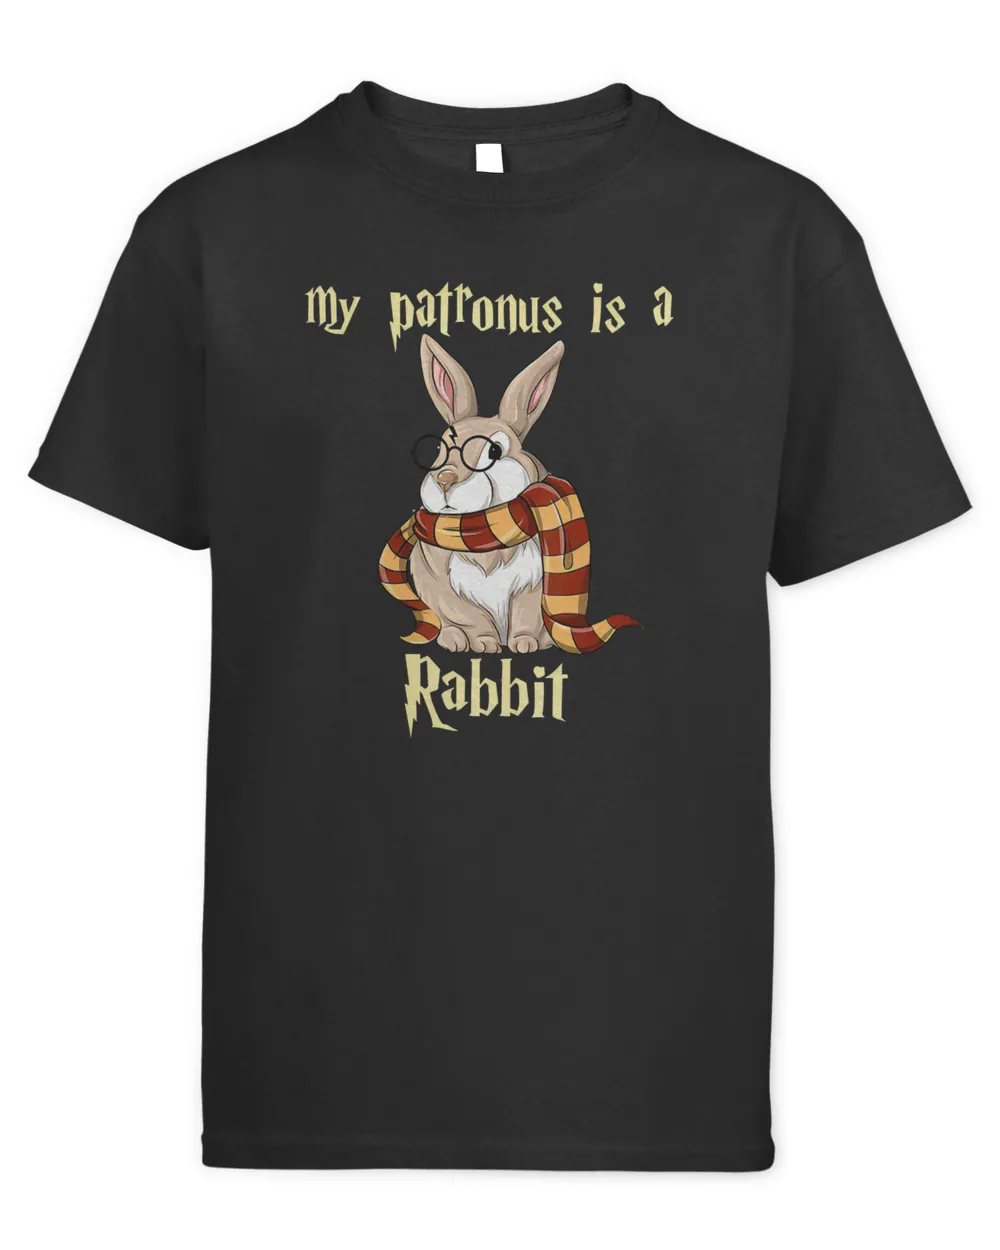 My patronus is a rabbit